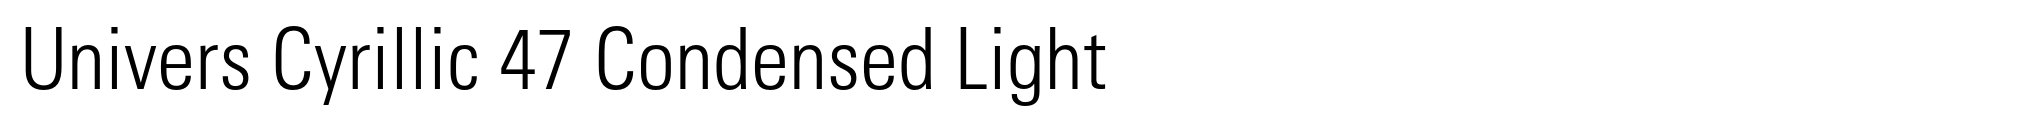 Univers Cyrillic 47 Condensed Light image